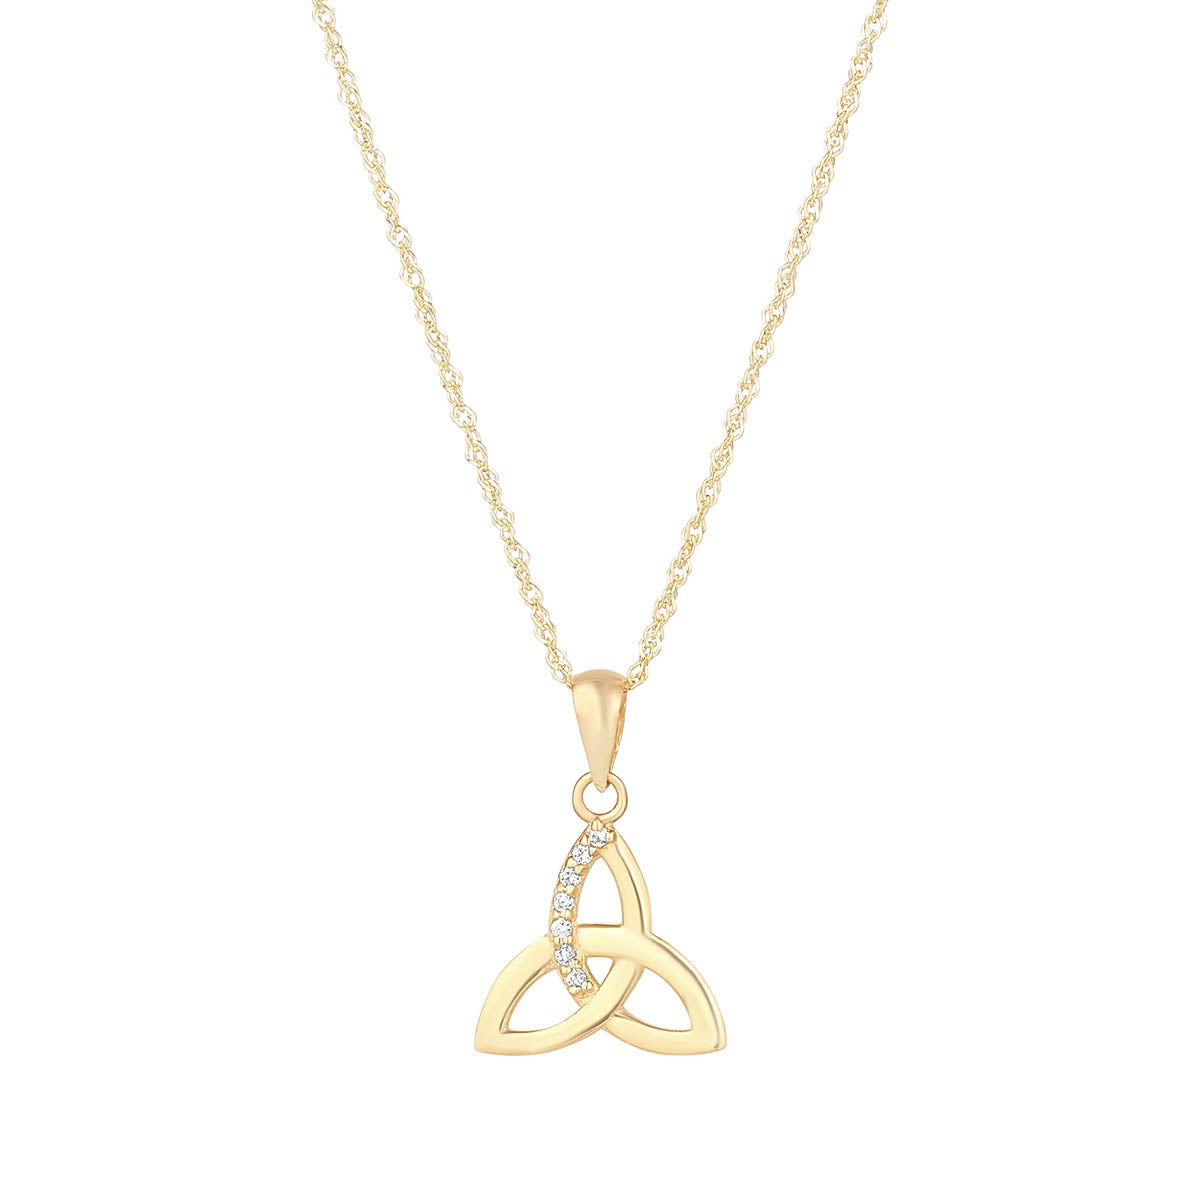 Solvar 10k gold cubic zirconia trinity knot necklace S46923